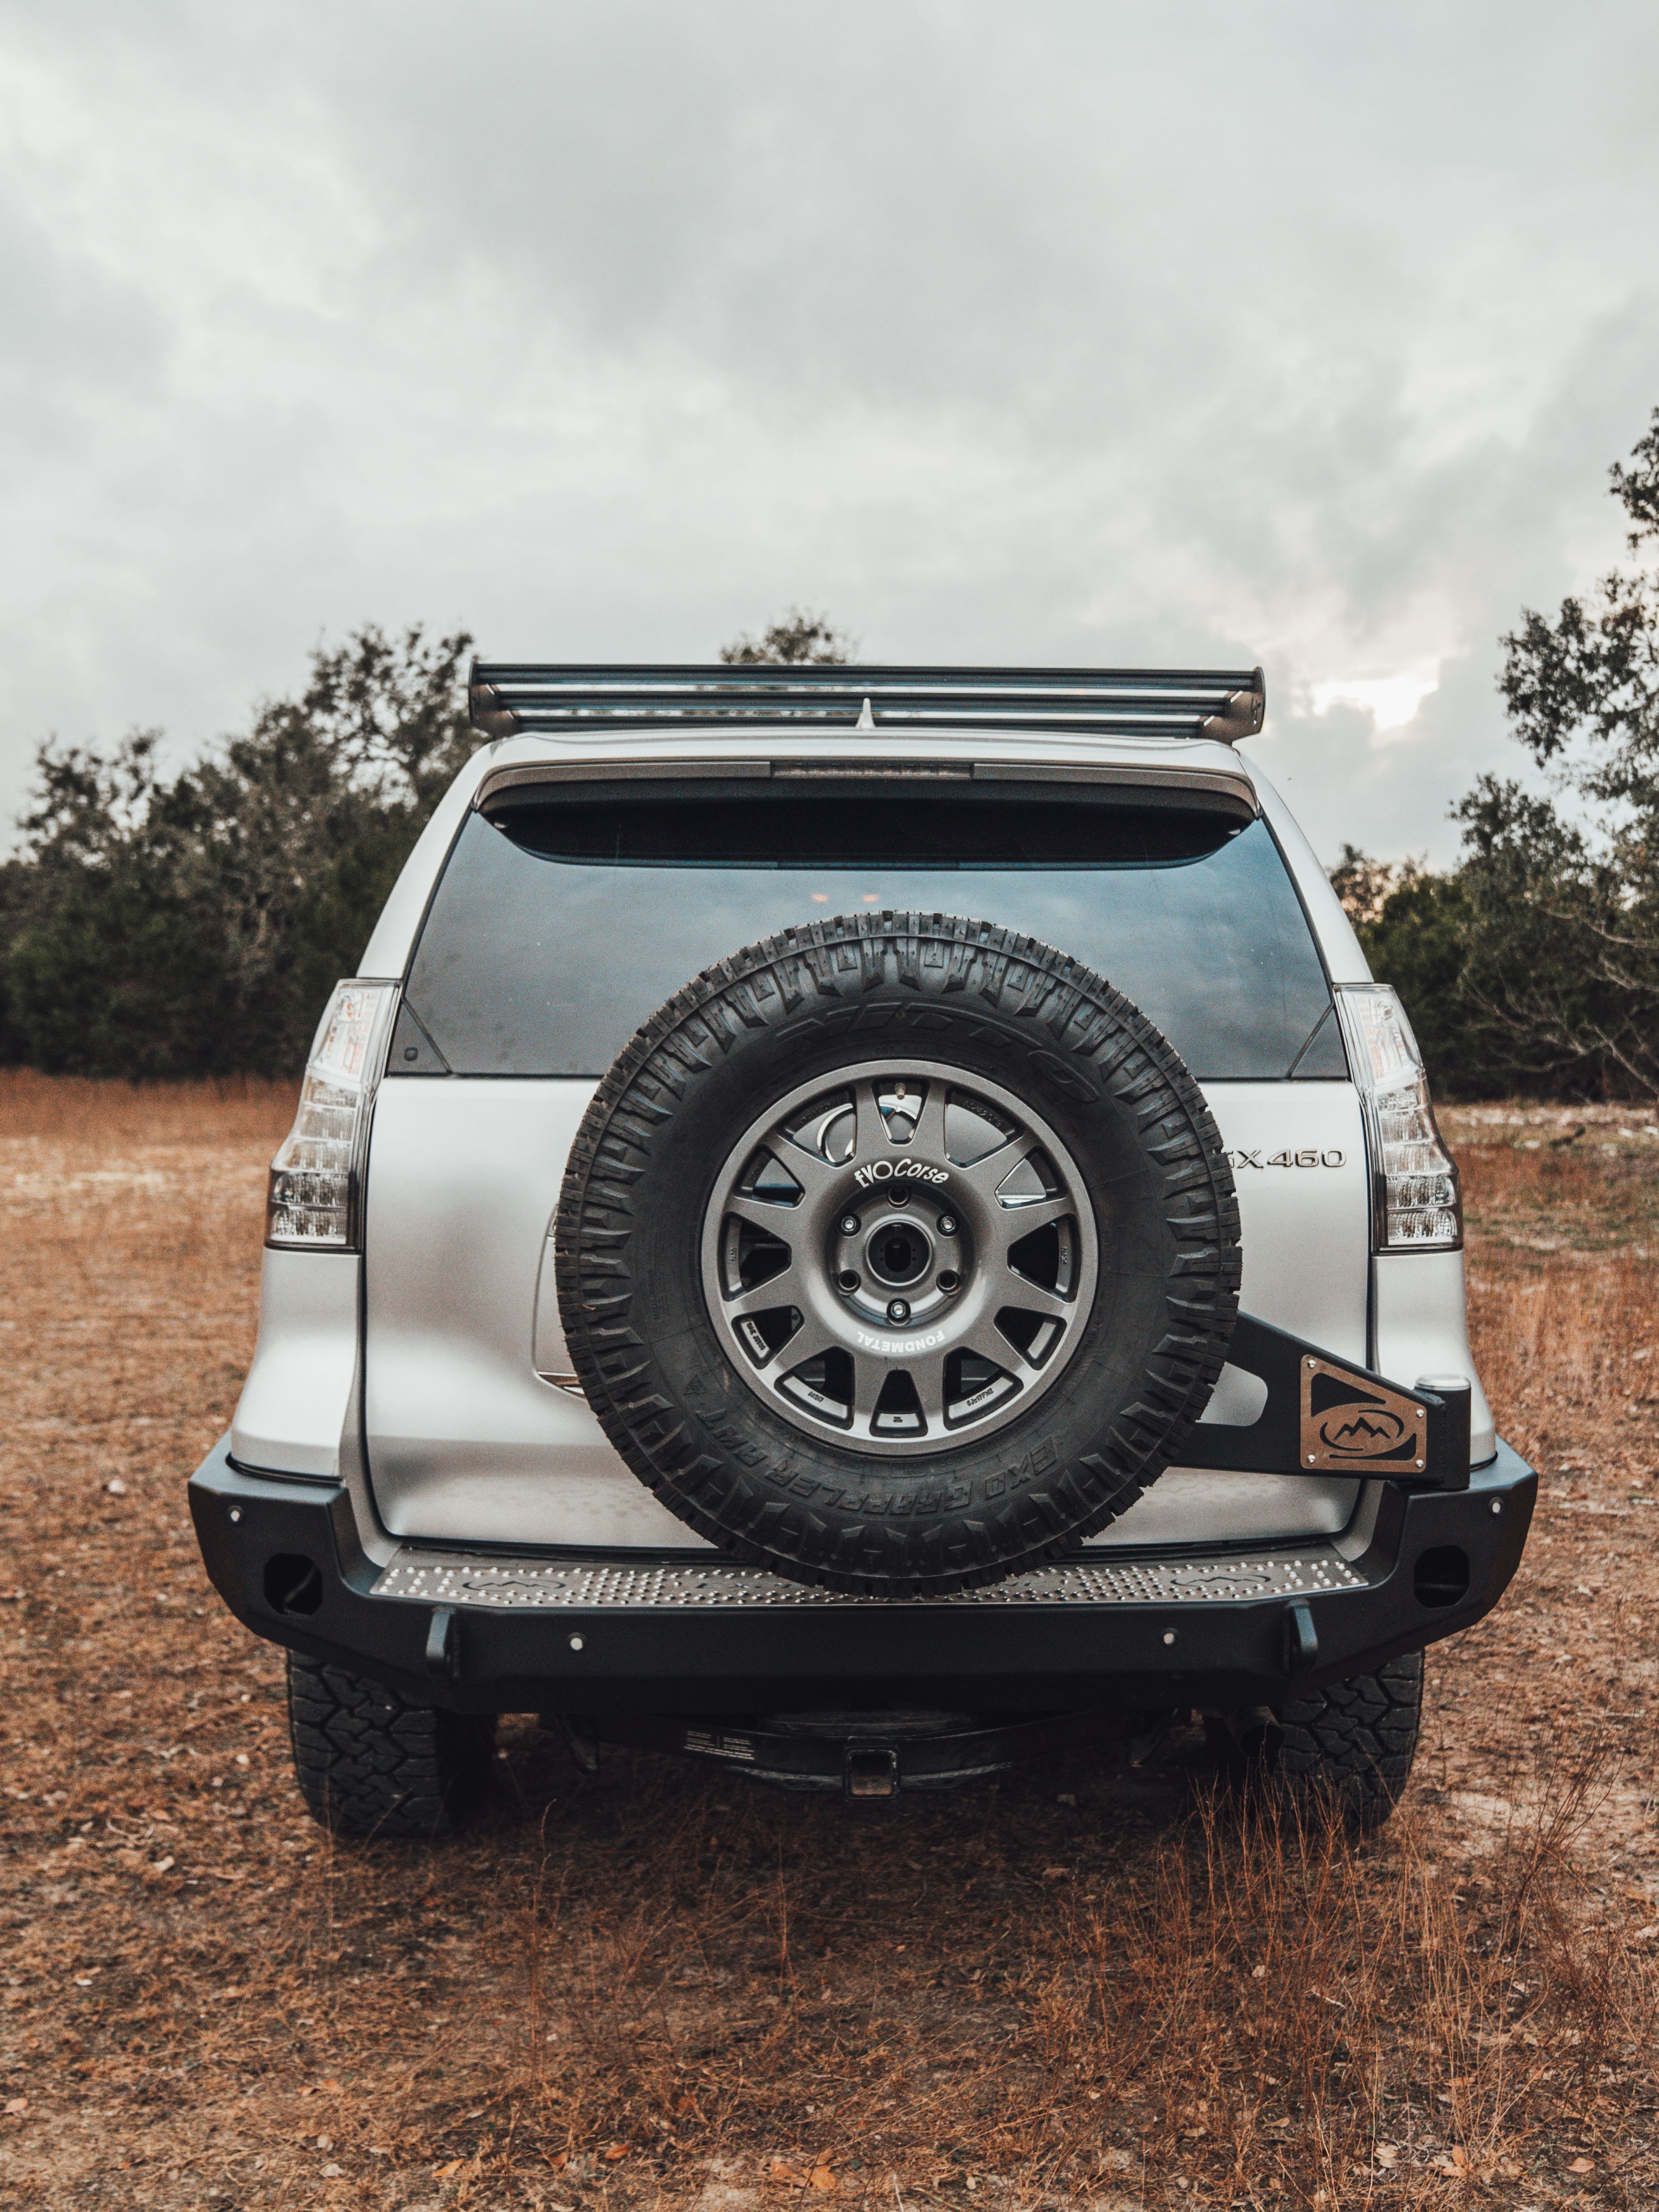 2018 Lexus GX 460 Base in Silver with Dobinson Suspension 2" Lift Kit, Warn Winch, CBI Roof Rack, Rock Slider Steps, Evo Corse Fondmetal Wheels, Expedition Rear Bumper, Metal Tech Front Bumper